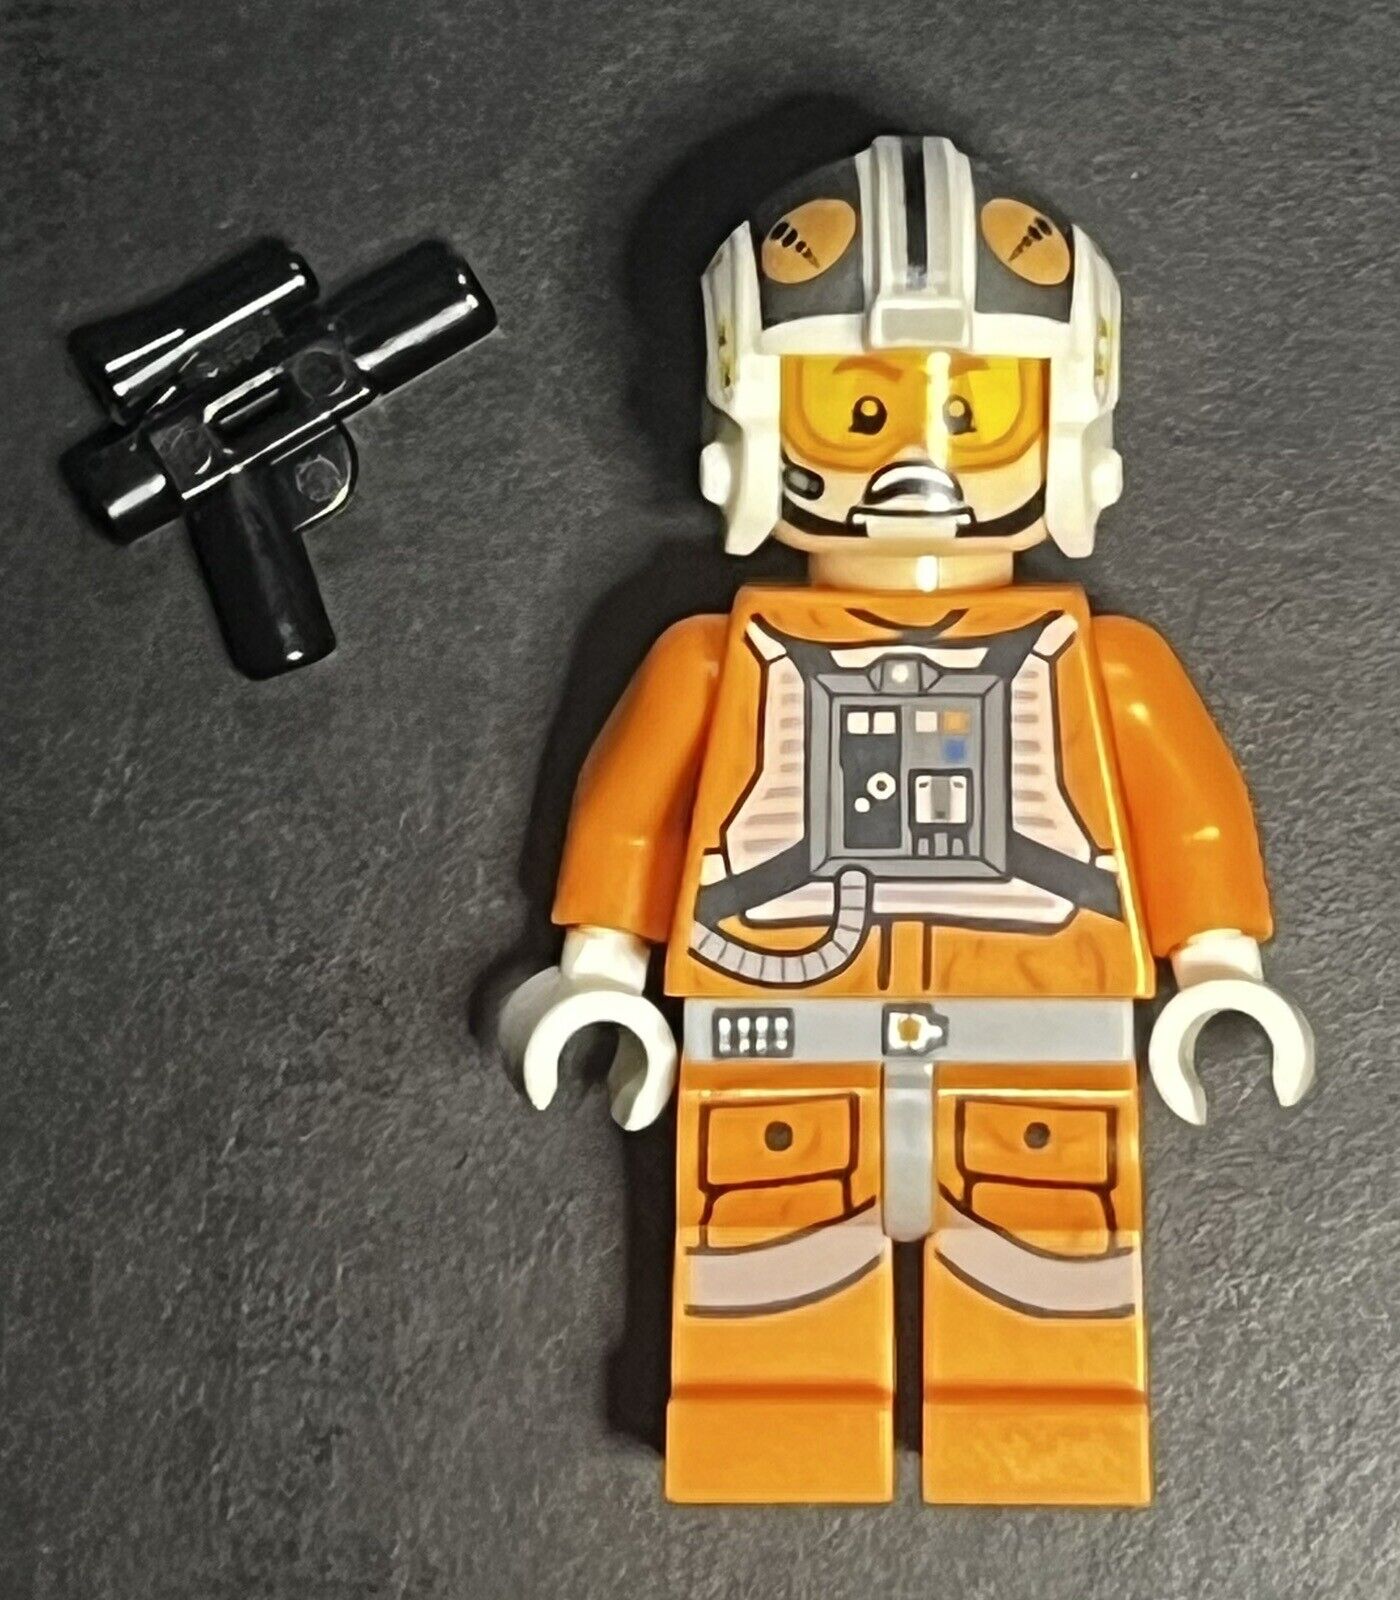 LEGO Star Wars Rebel Pilot X-Wing Theron Nett Minifigure (sw0544) 75032